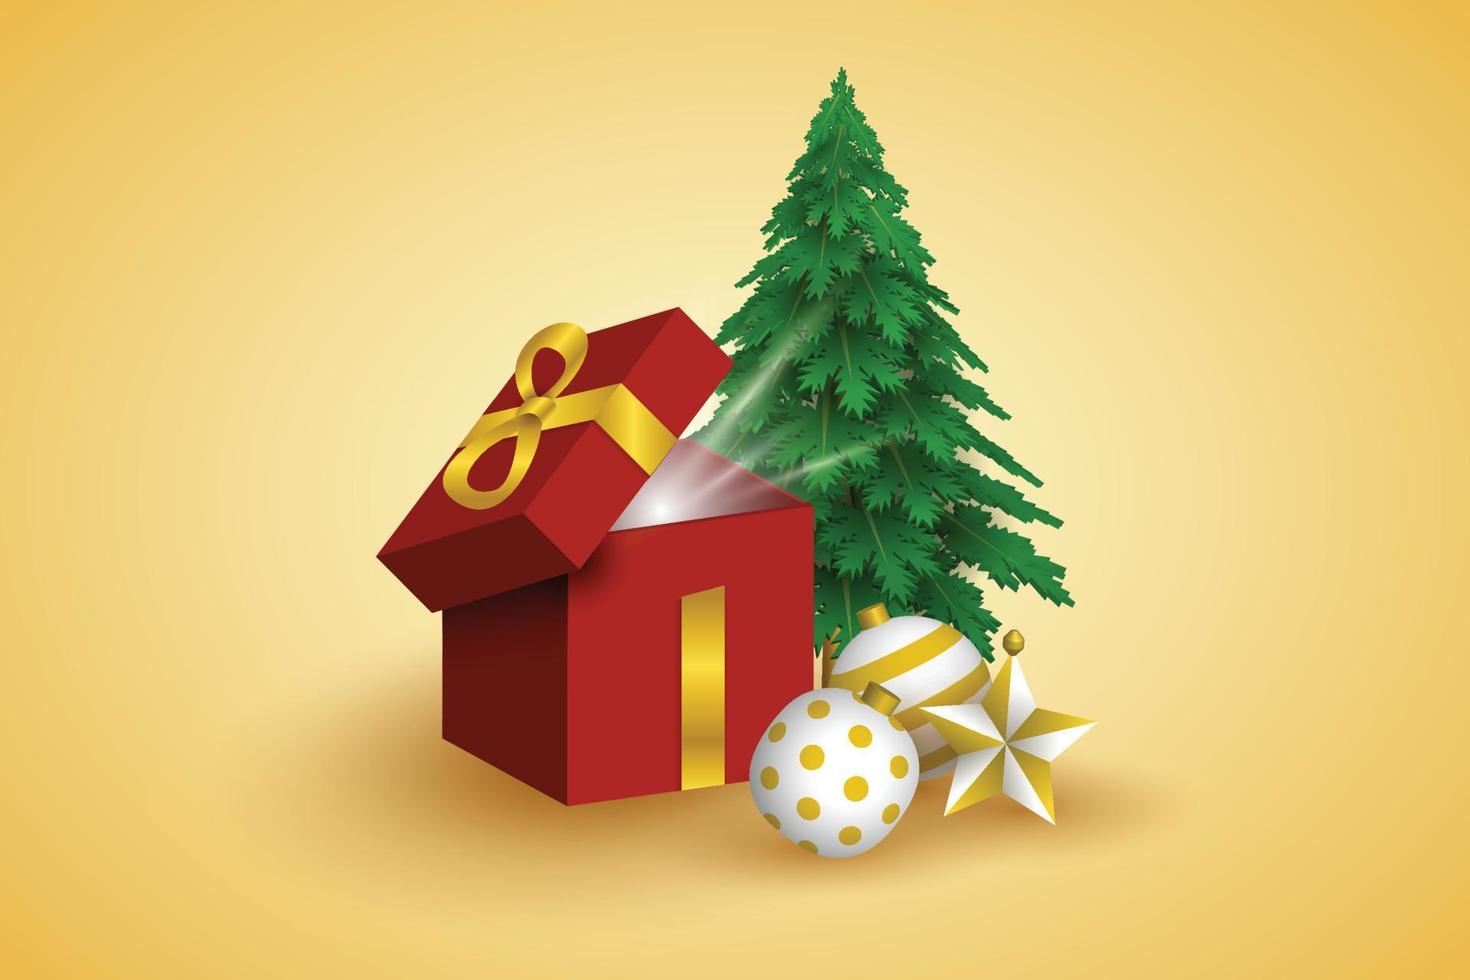 3d christmas ornament vector graphic, gift box, fir tree, creative design